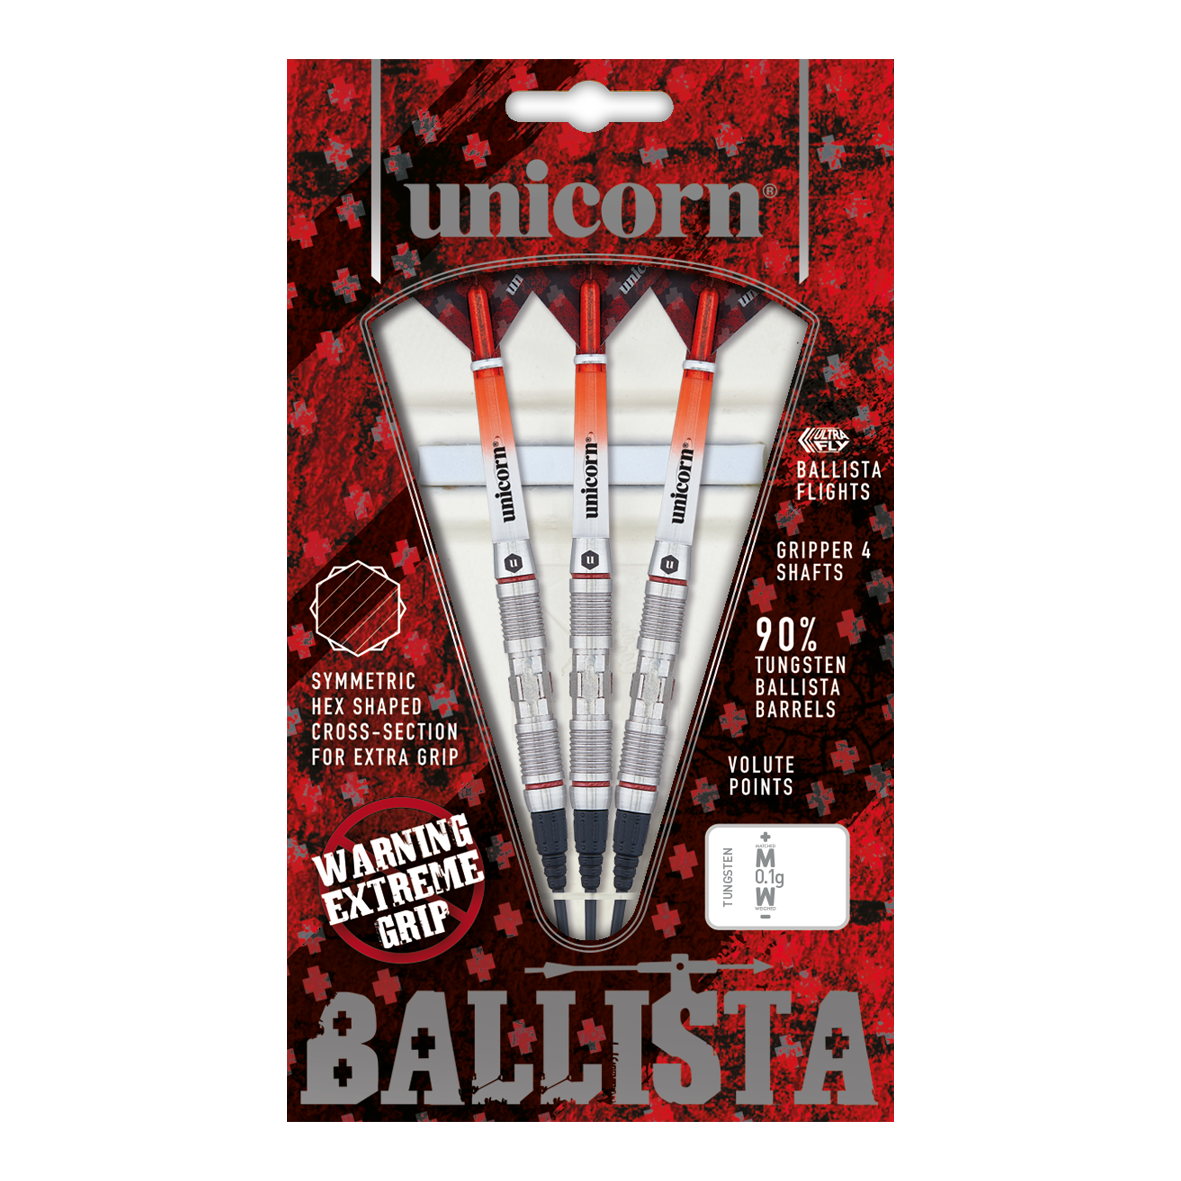 Unicorn Ballista Style 2 soft darts